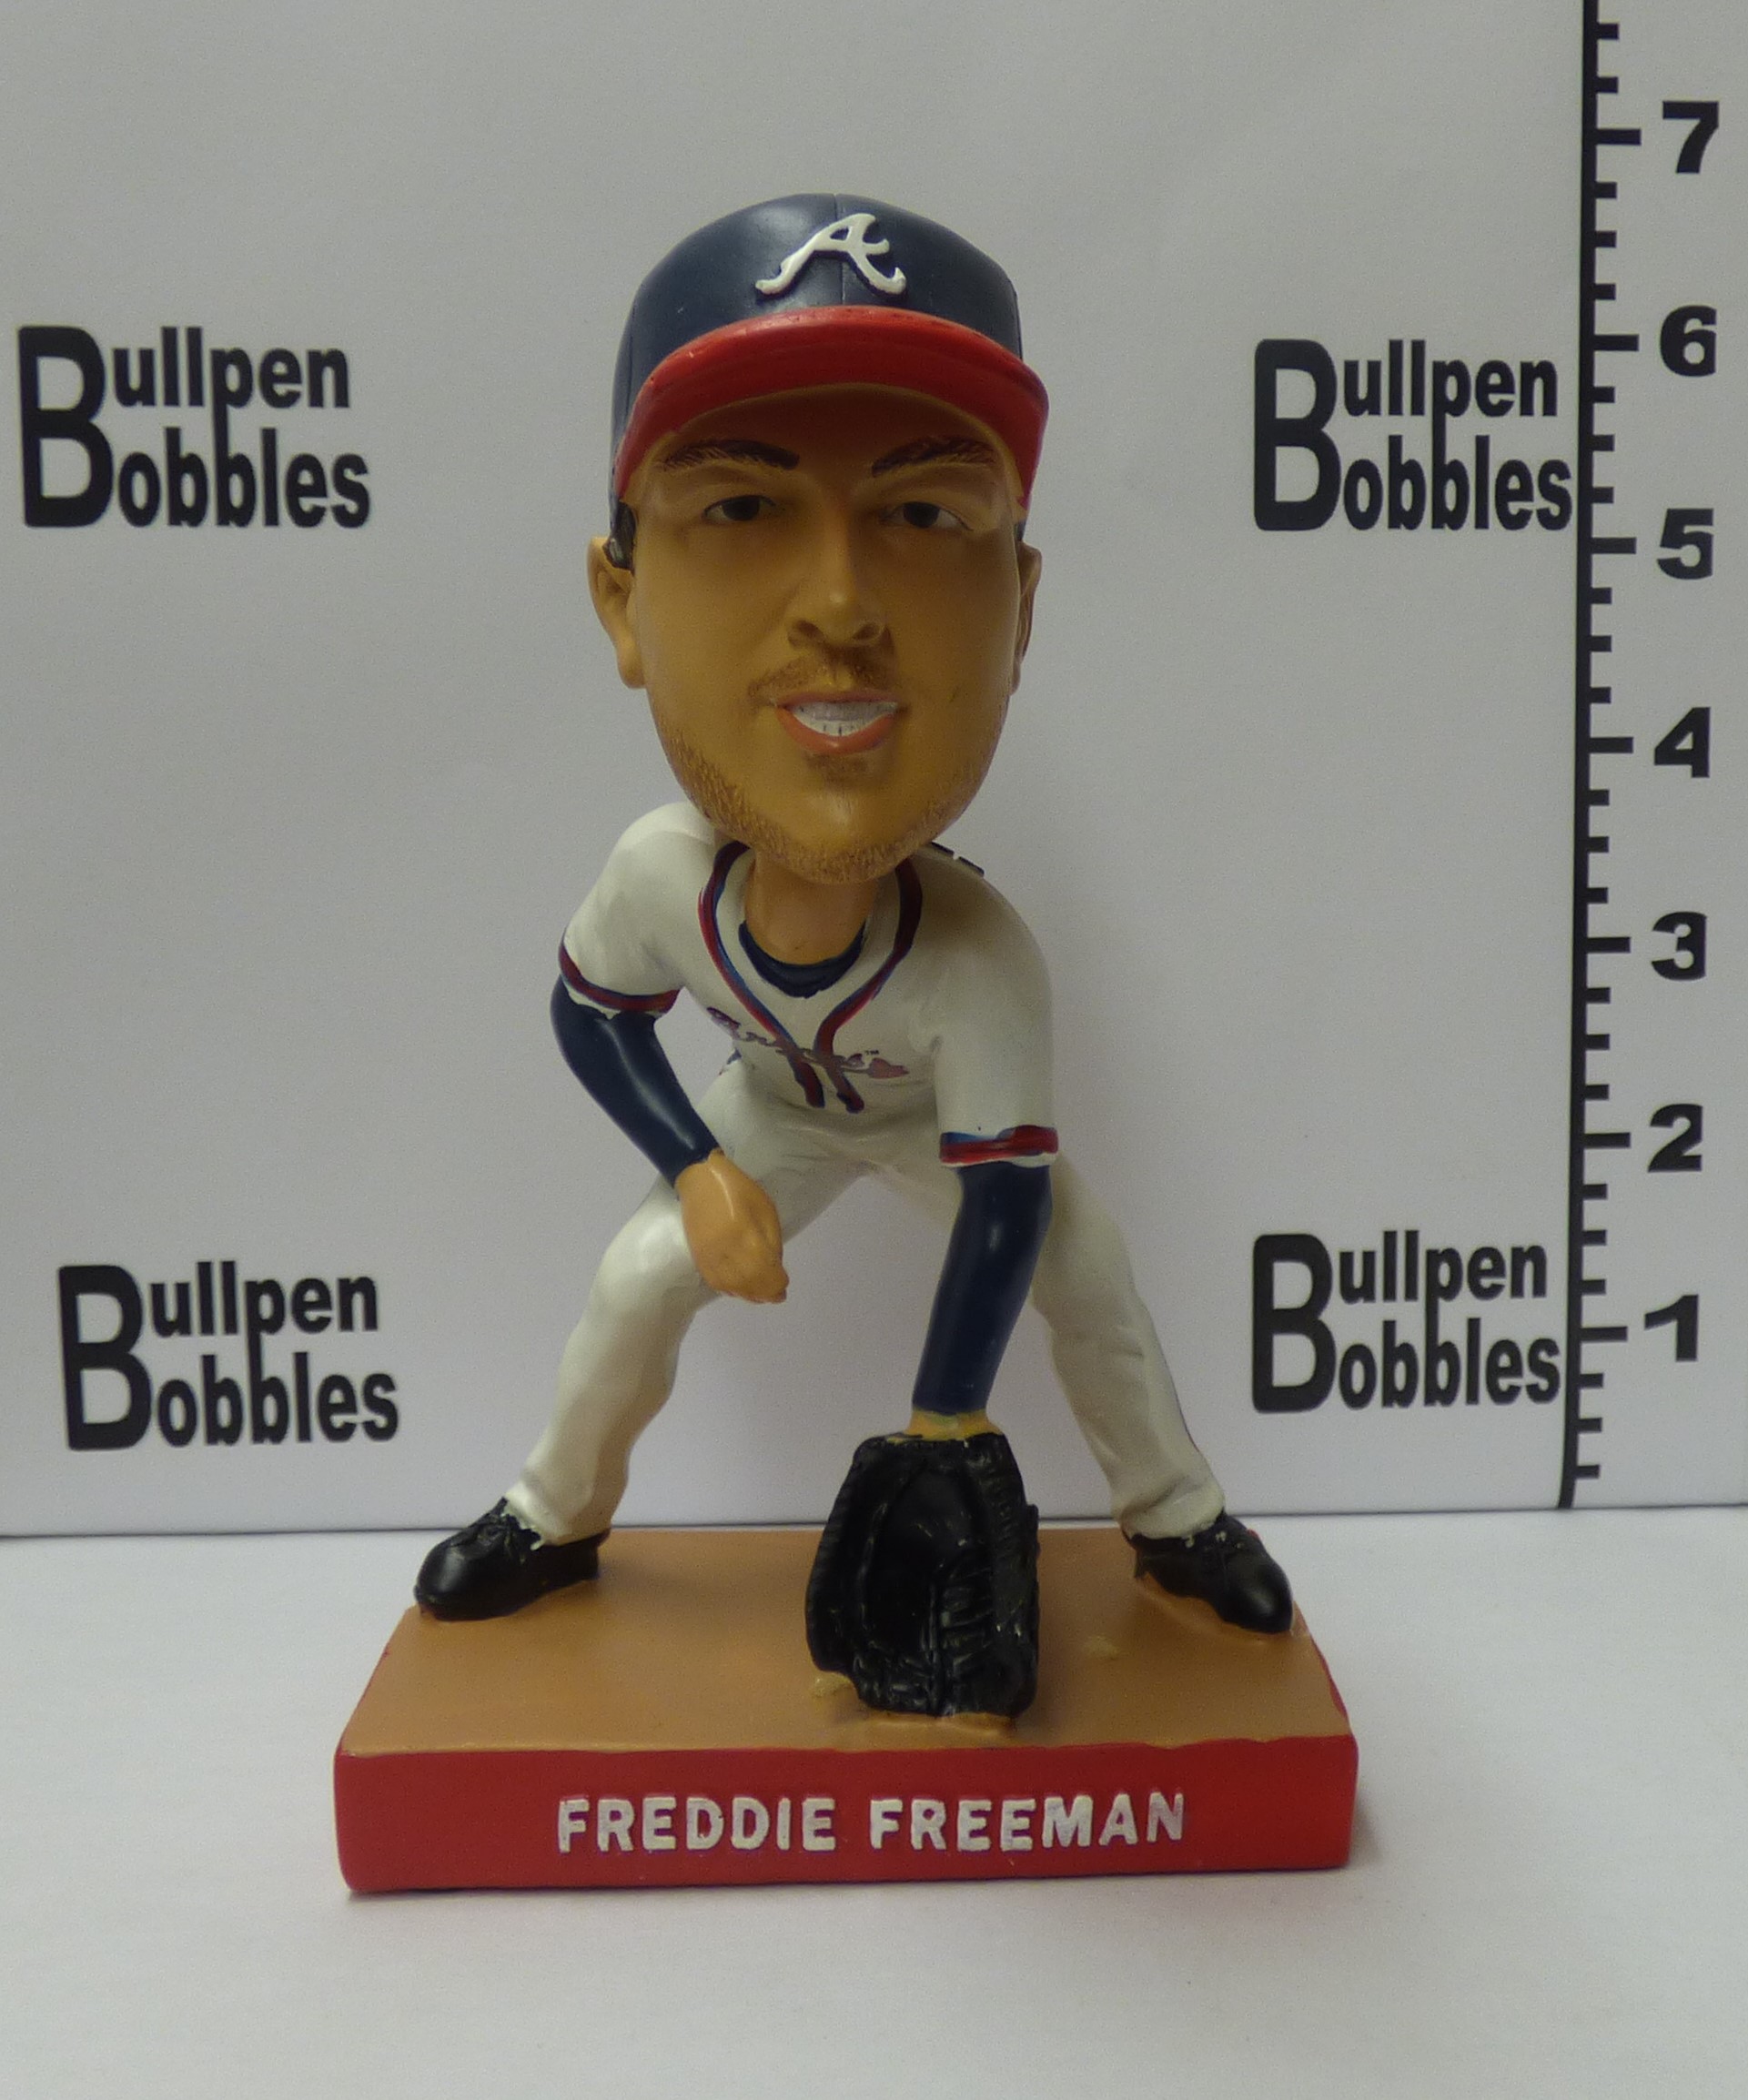 Freddie Freeman bobblehead